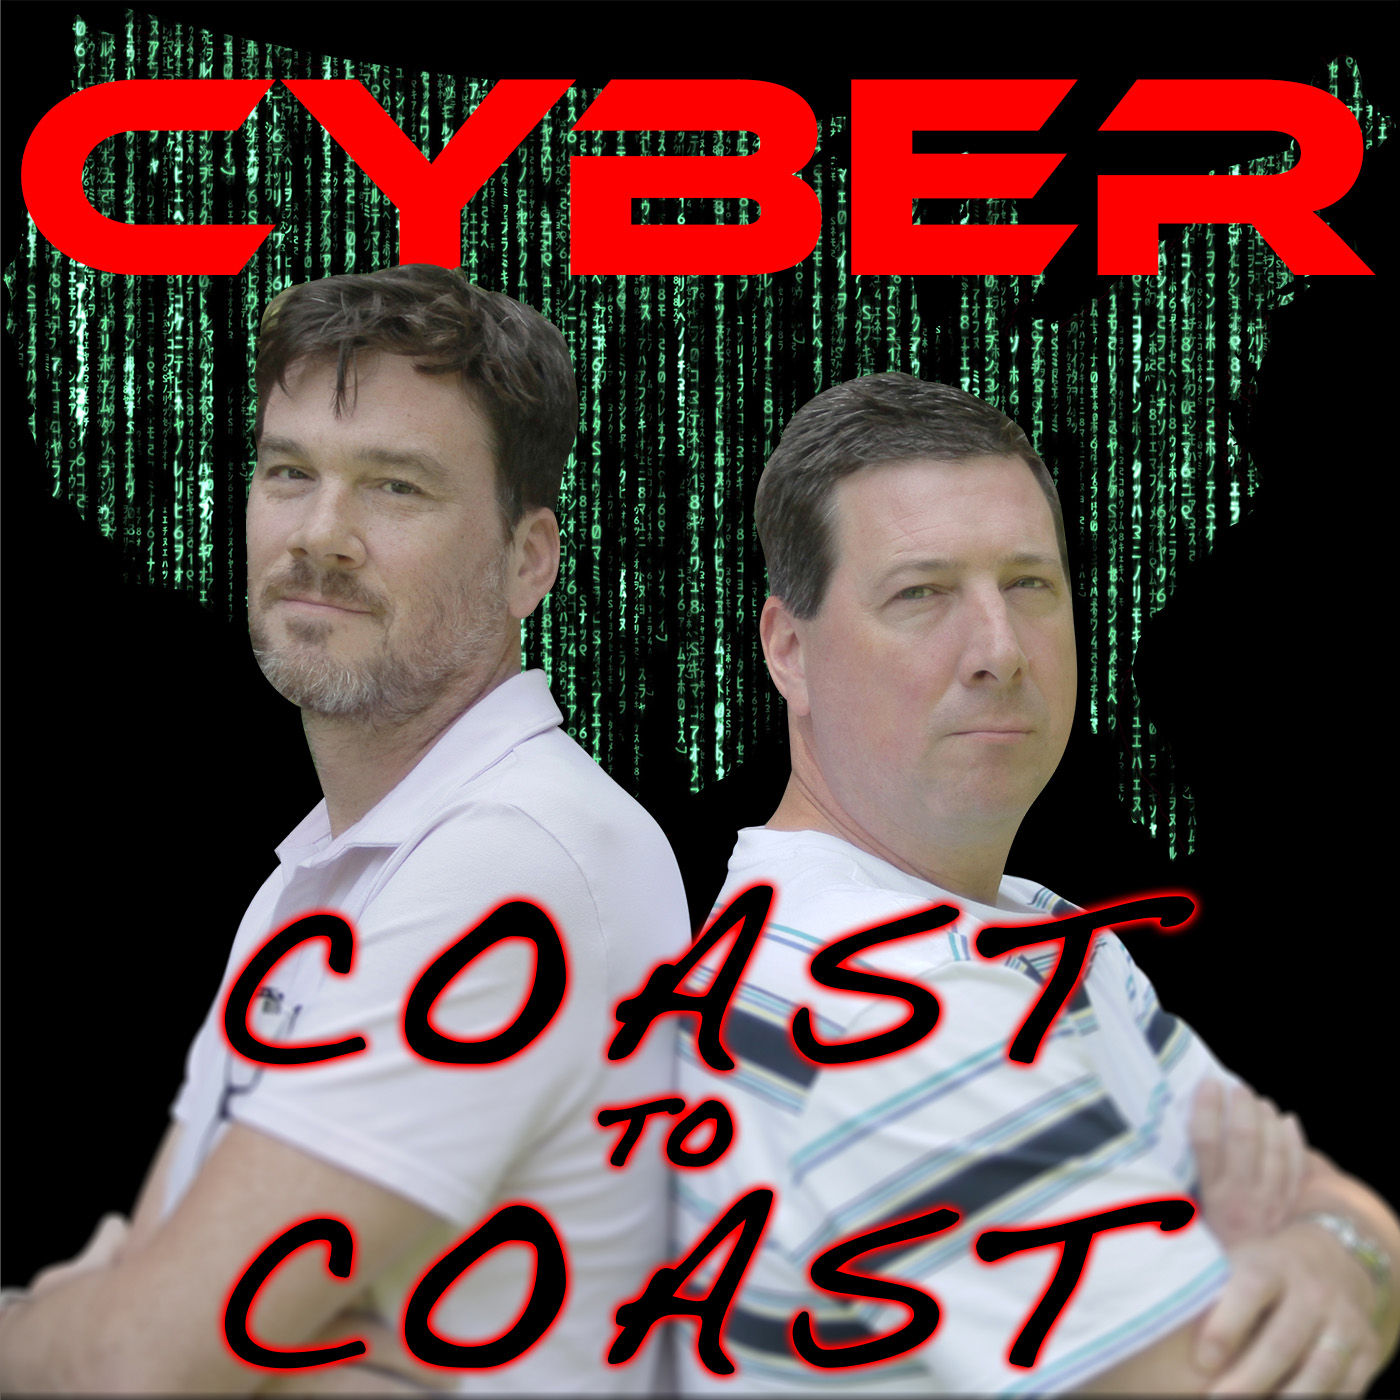 Cyber Coast to Coast audio podcast